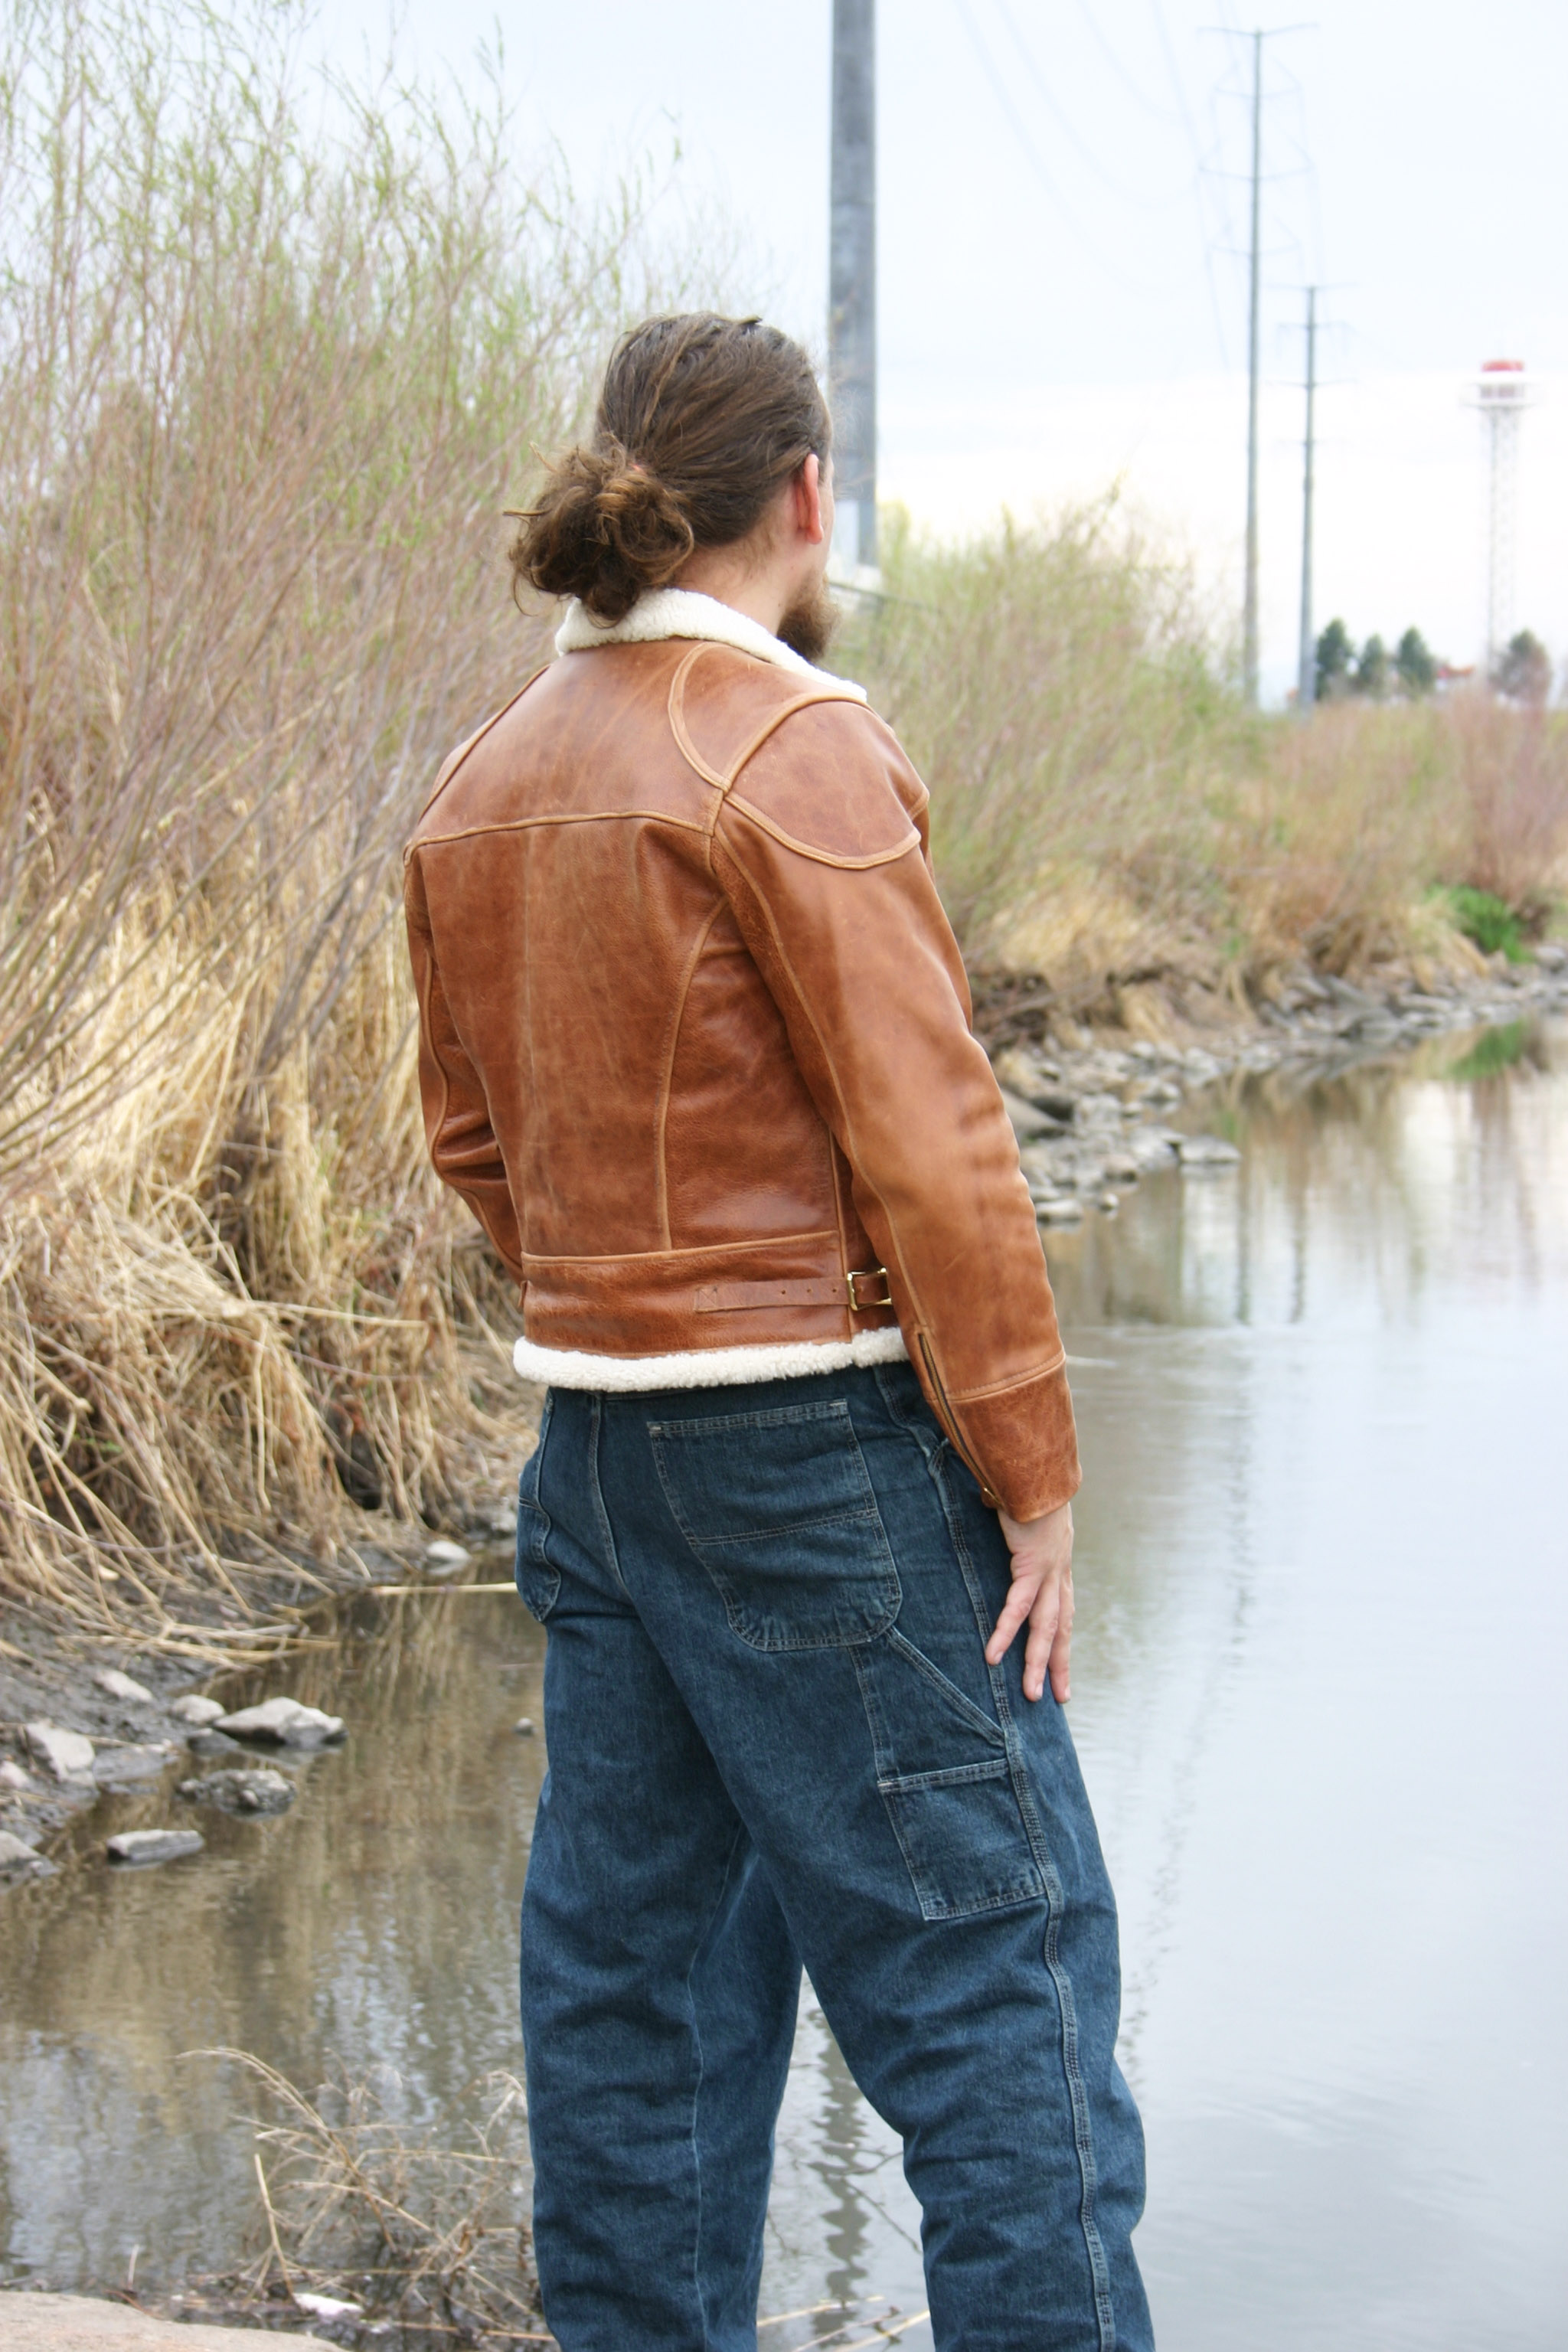 ik ben slaperig methaan Ultieme Custom Leather Jackets – Denver Bespoke: Custom Tailored Suits